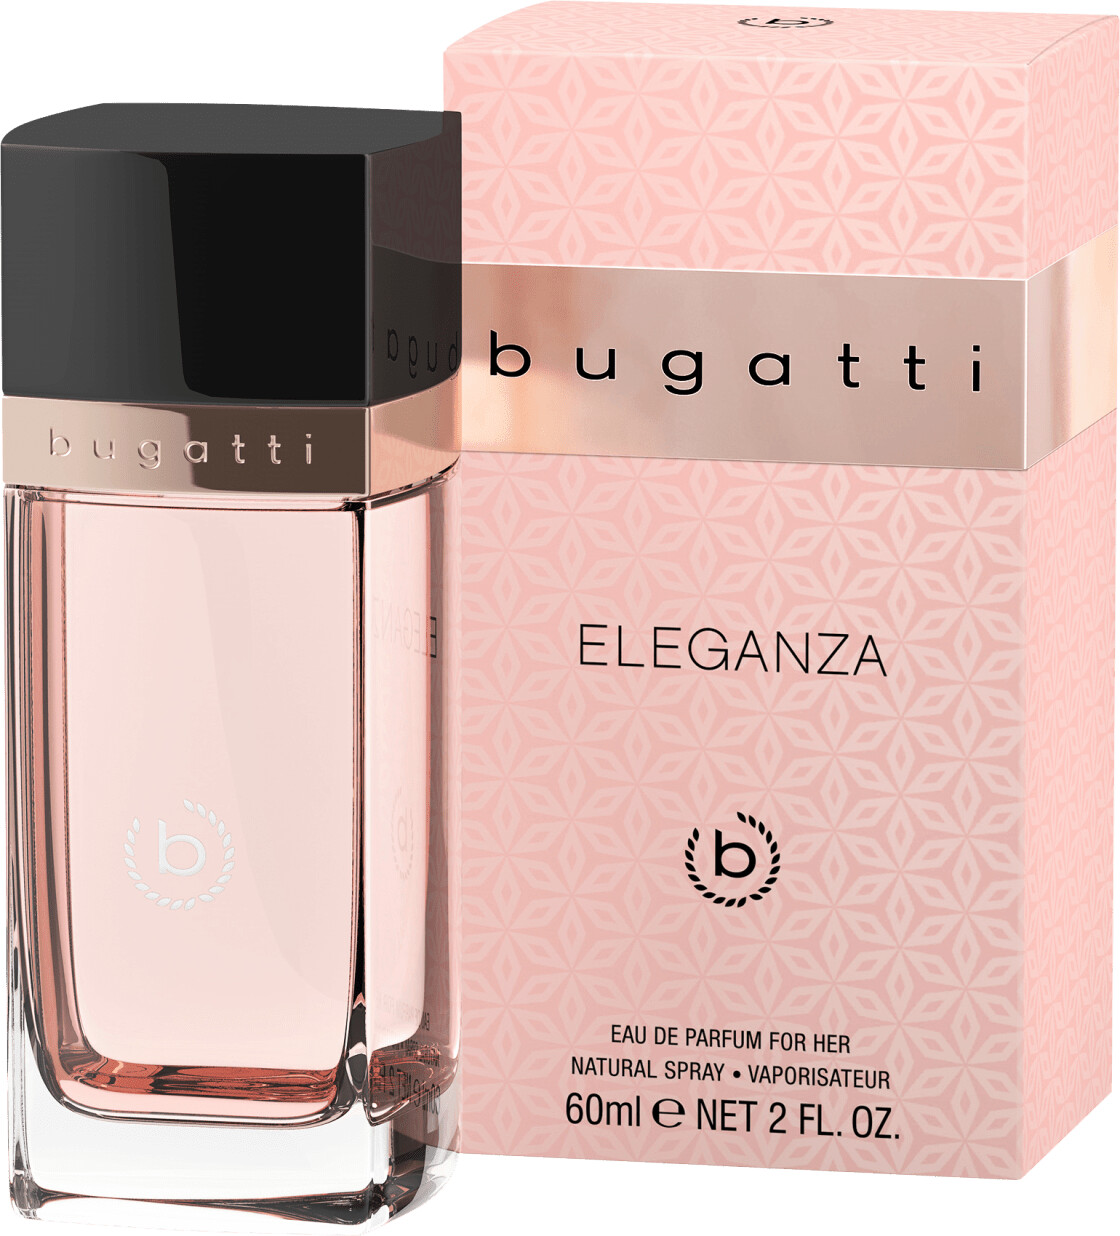 Bugatti Eleganza Eau de Parfum (60ml) ab 17,45 € | Preisvergleich bei